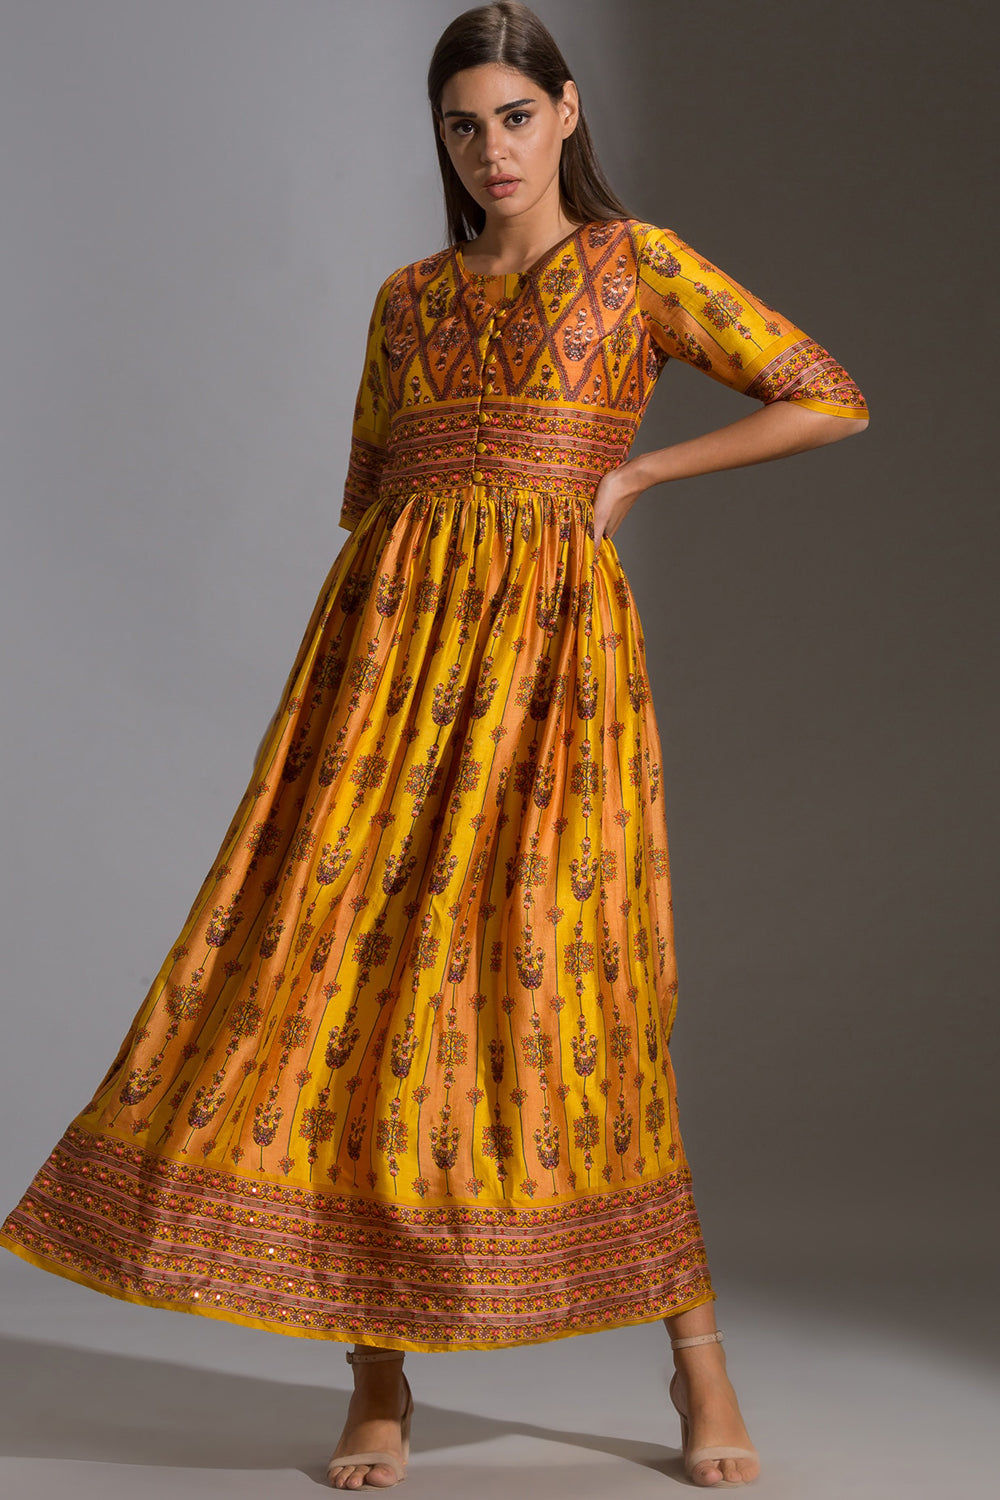 Tilfi Intricate Printed Dress And Jacket